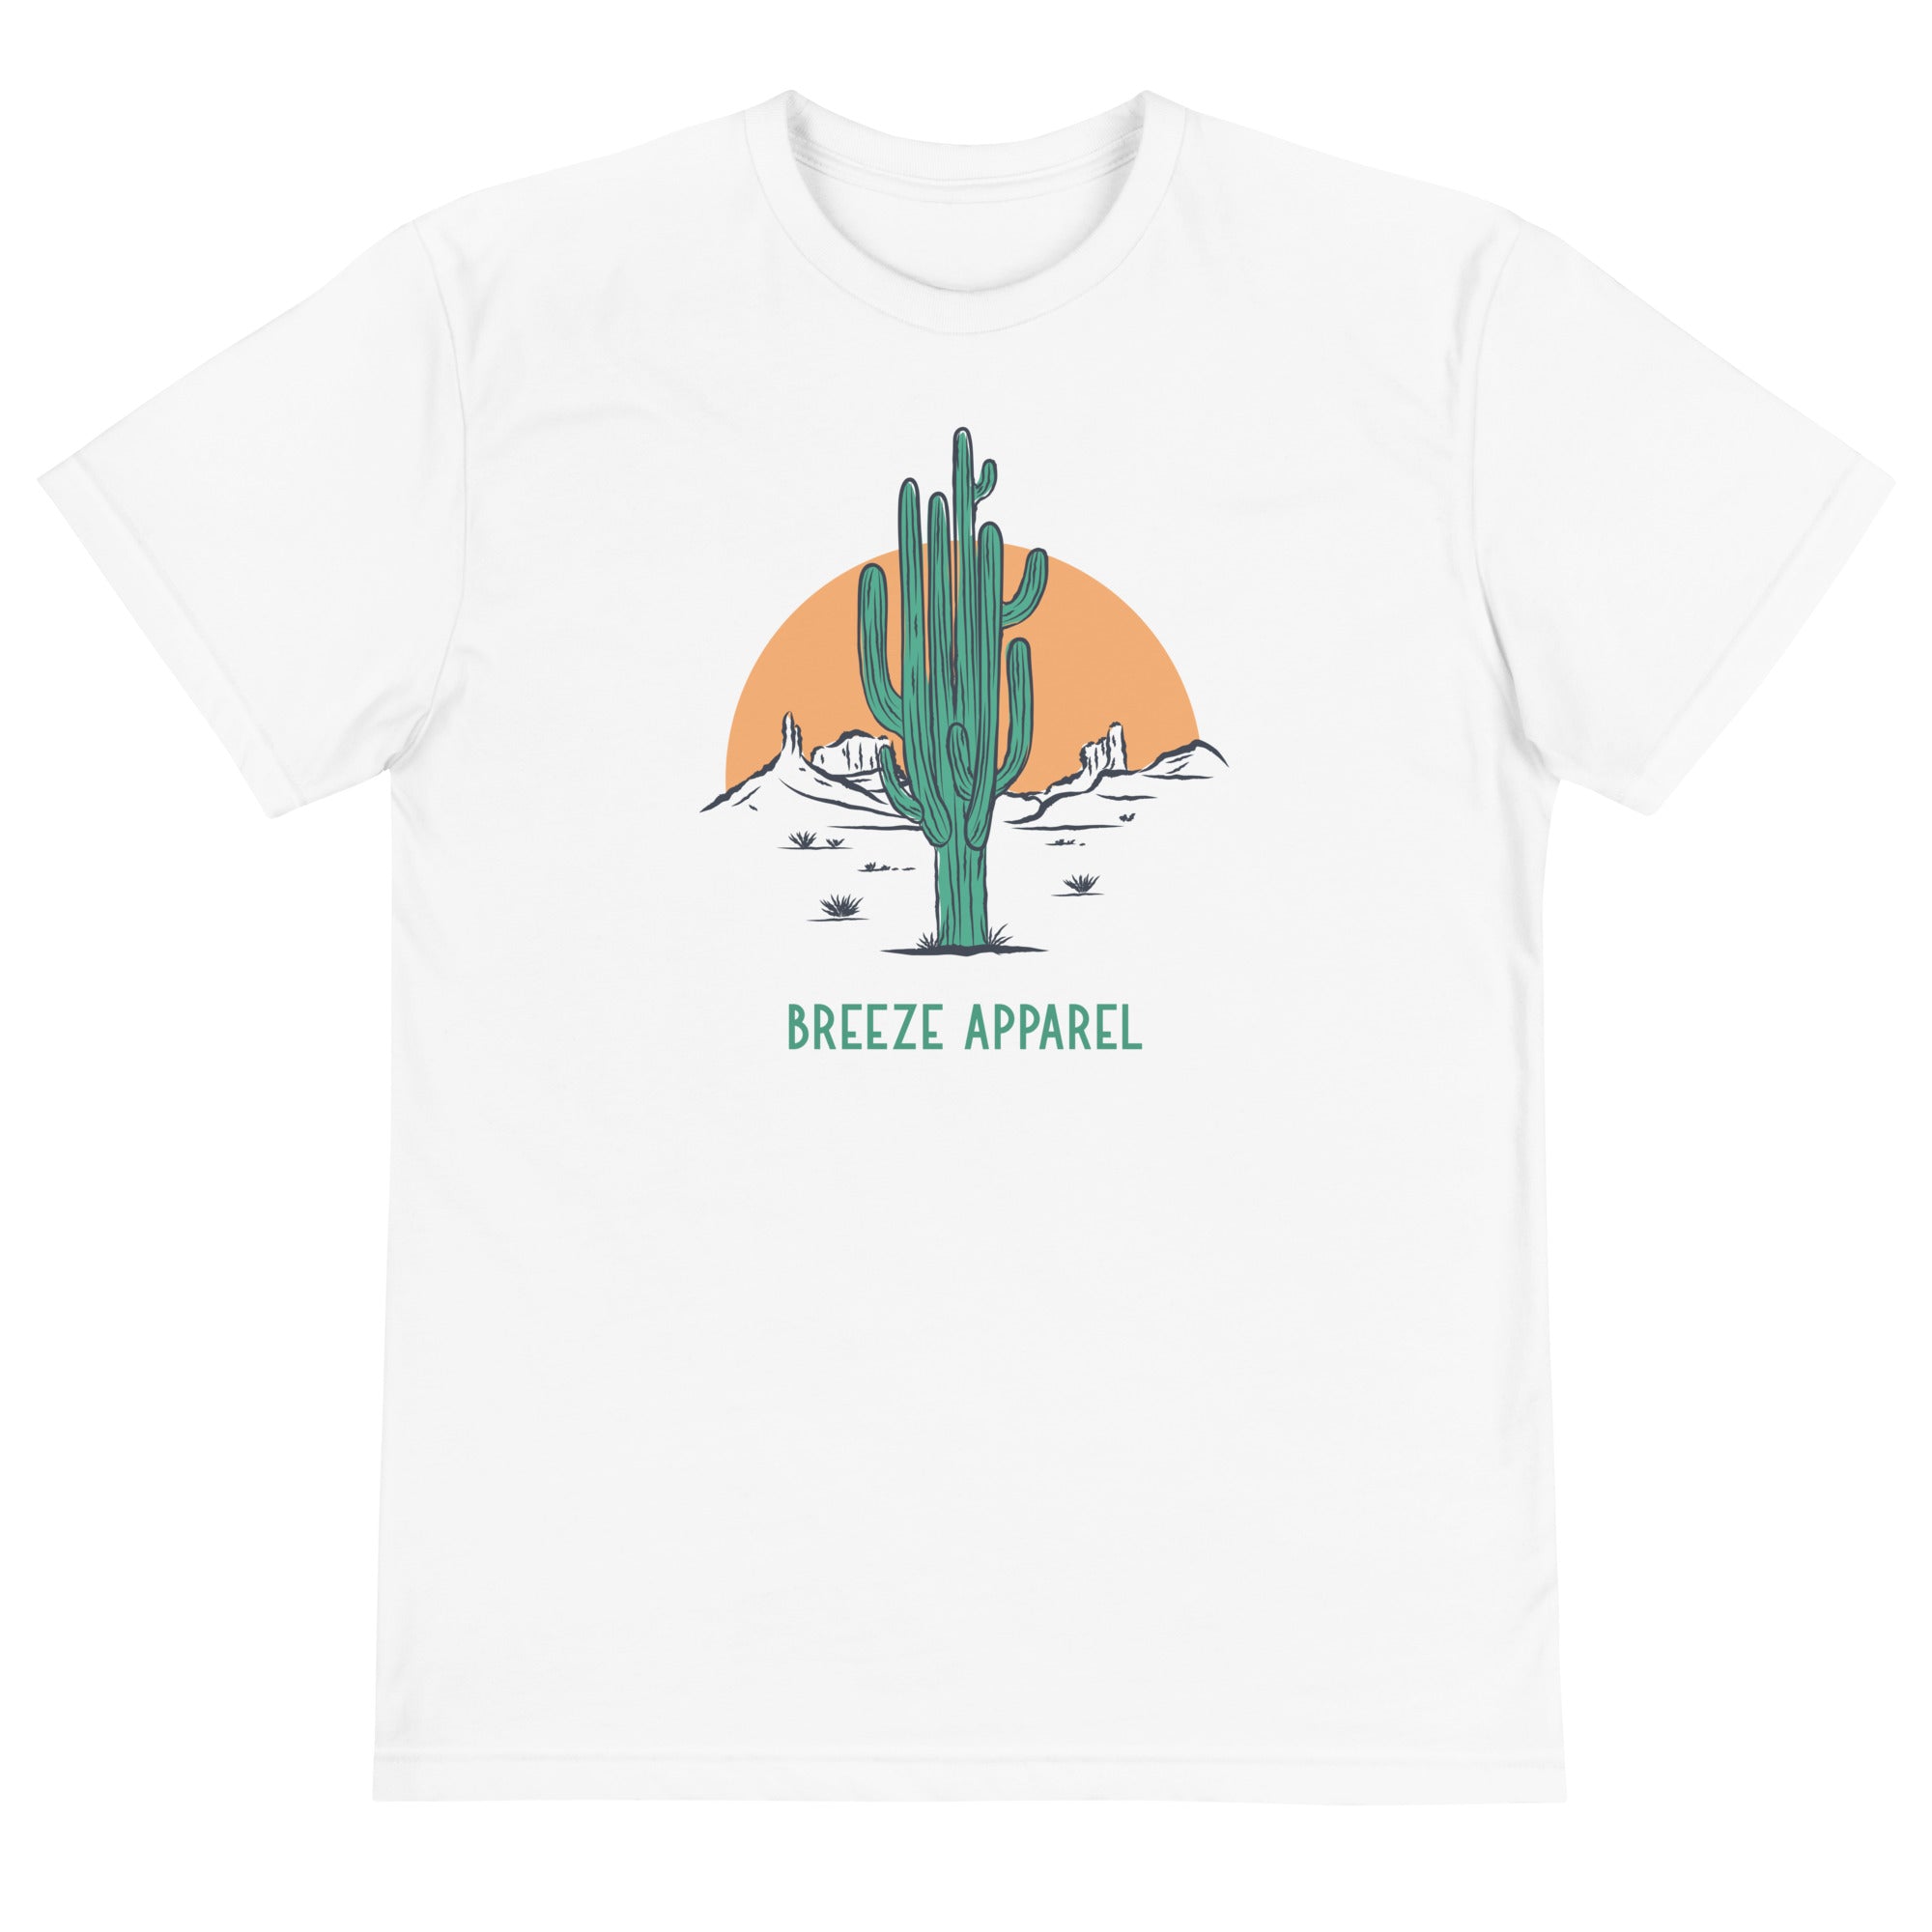 'Cactus Sunset' unisex eco tee